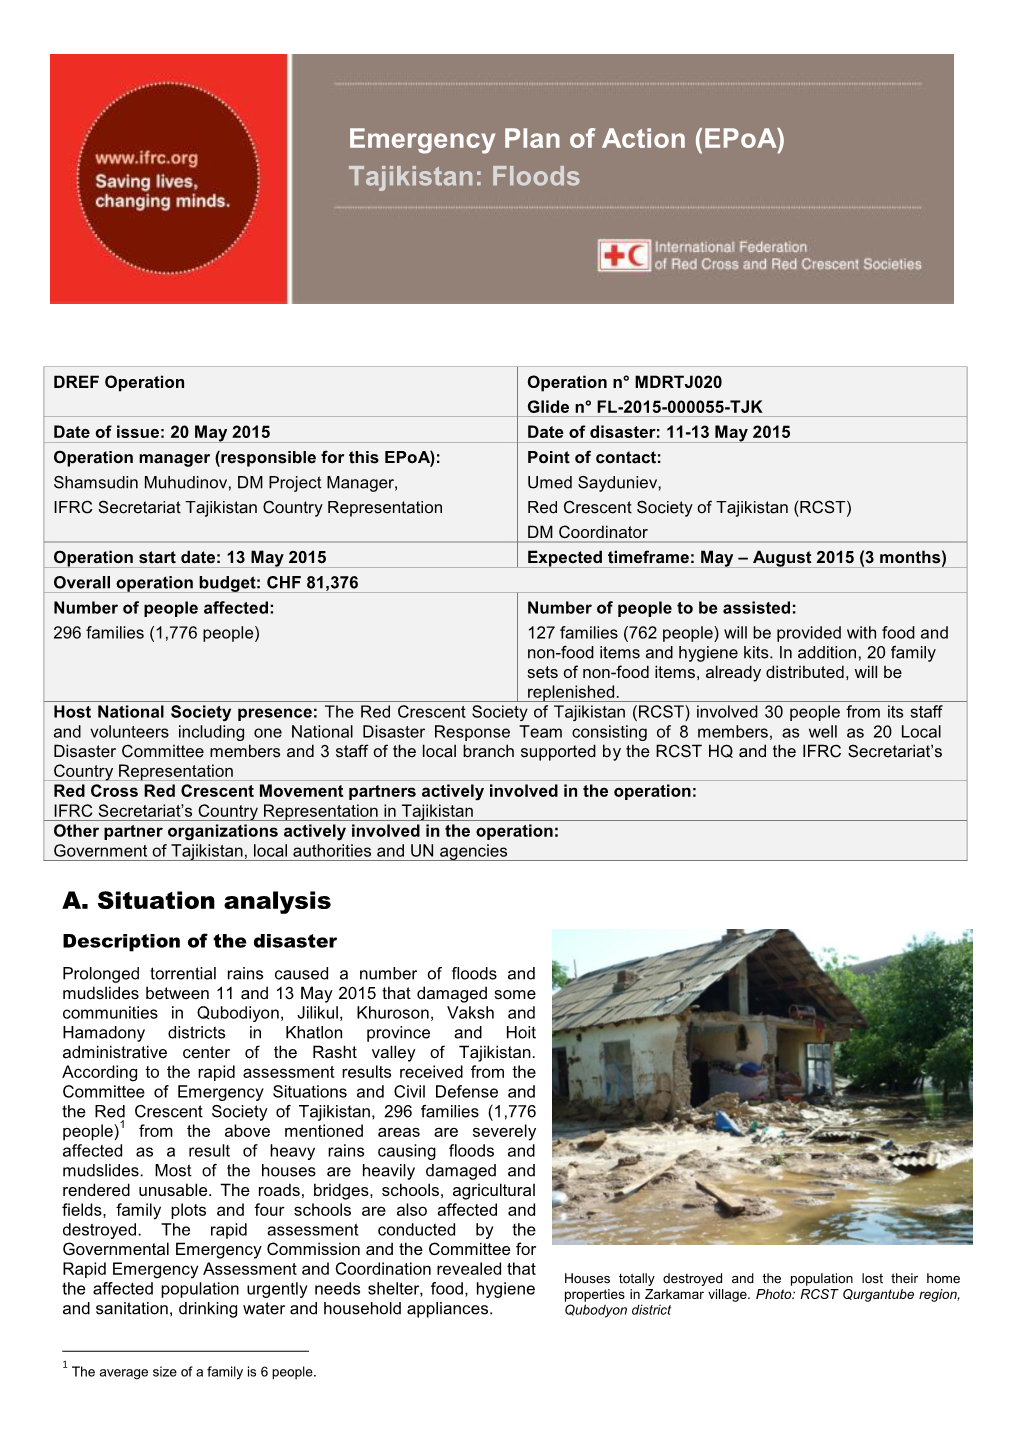 Emergency Plan of Action (Epoa) Tajikistan: Floods